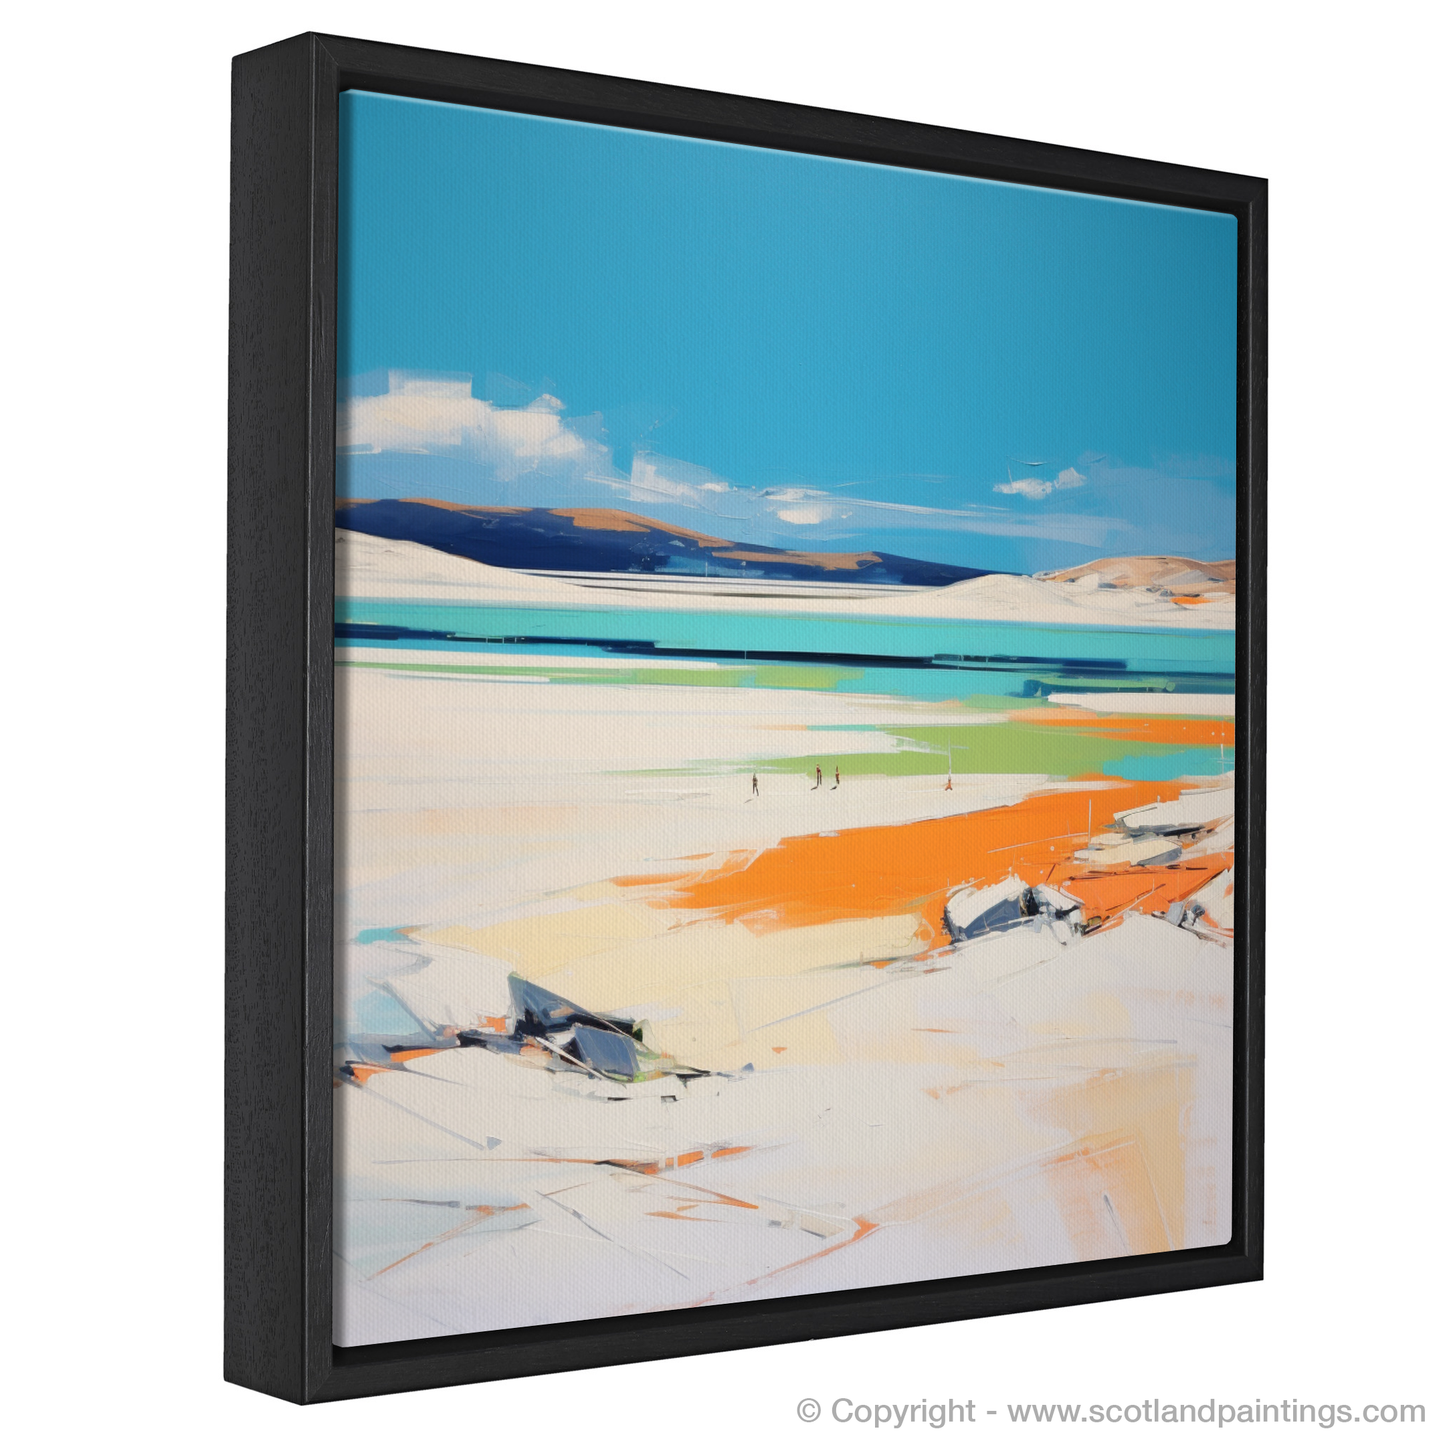 Painting and Art Print of Luskentyre Beach, Isle of Harris entitled "Luskentyre Beach: A Contemporary Tribute to Isle of Harris Splendour".